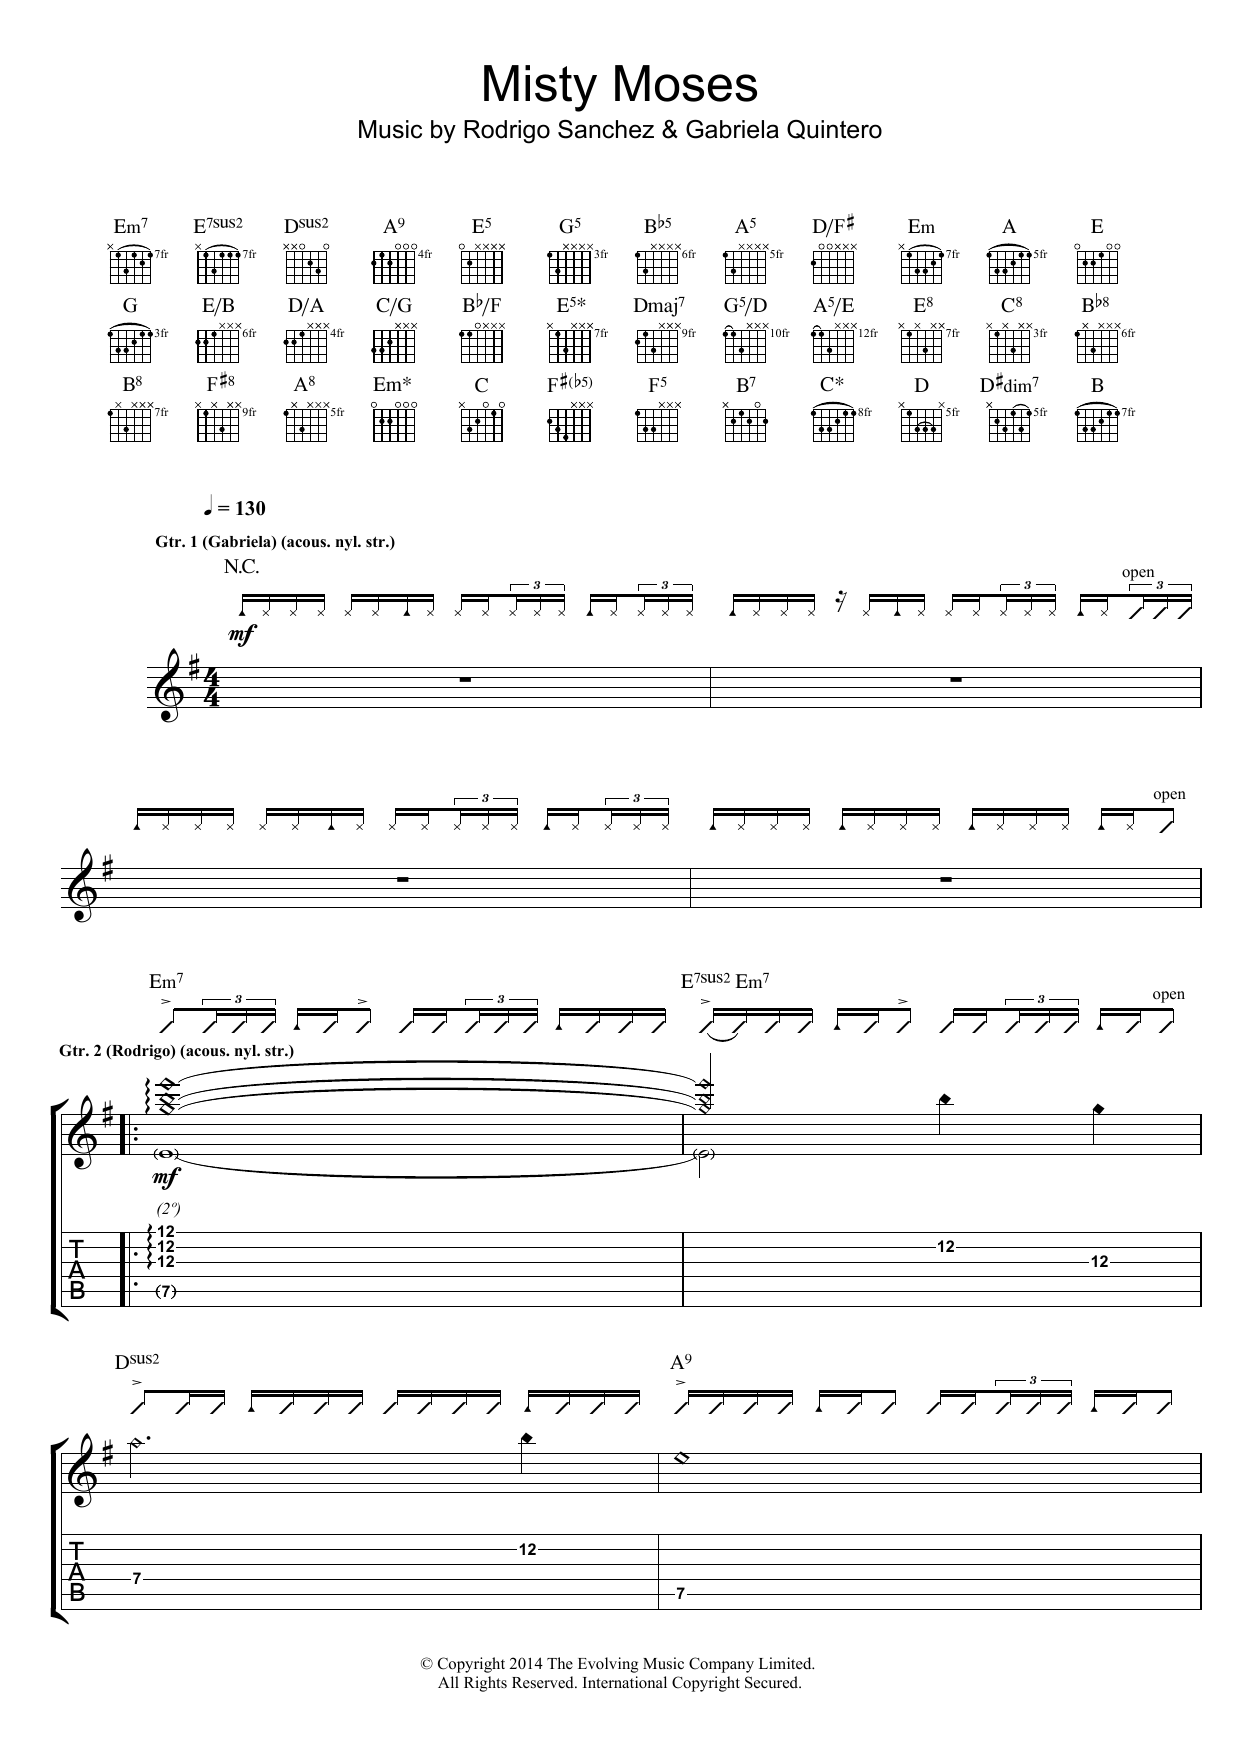 Rodrigo y Gabriela Misty Moses Sheet Music Notes & Chords for Guitar Tab - Download or Print PDF